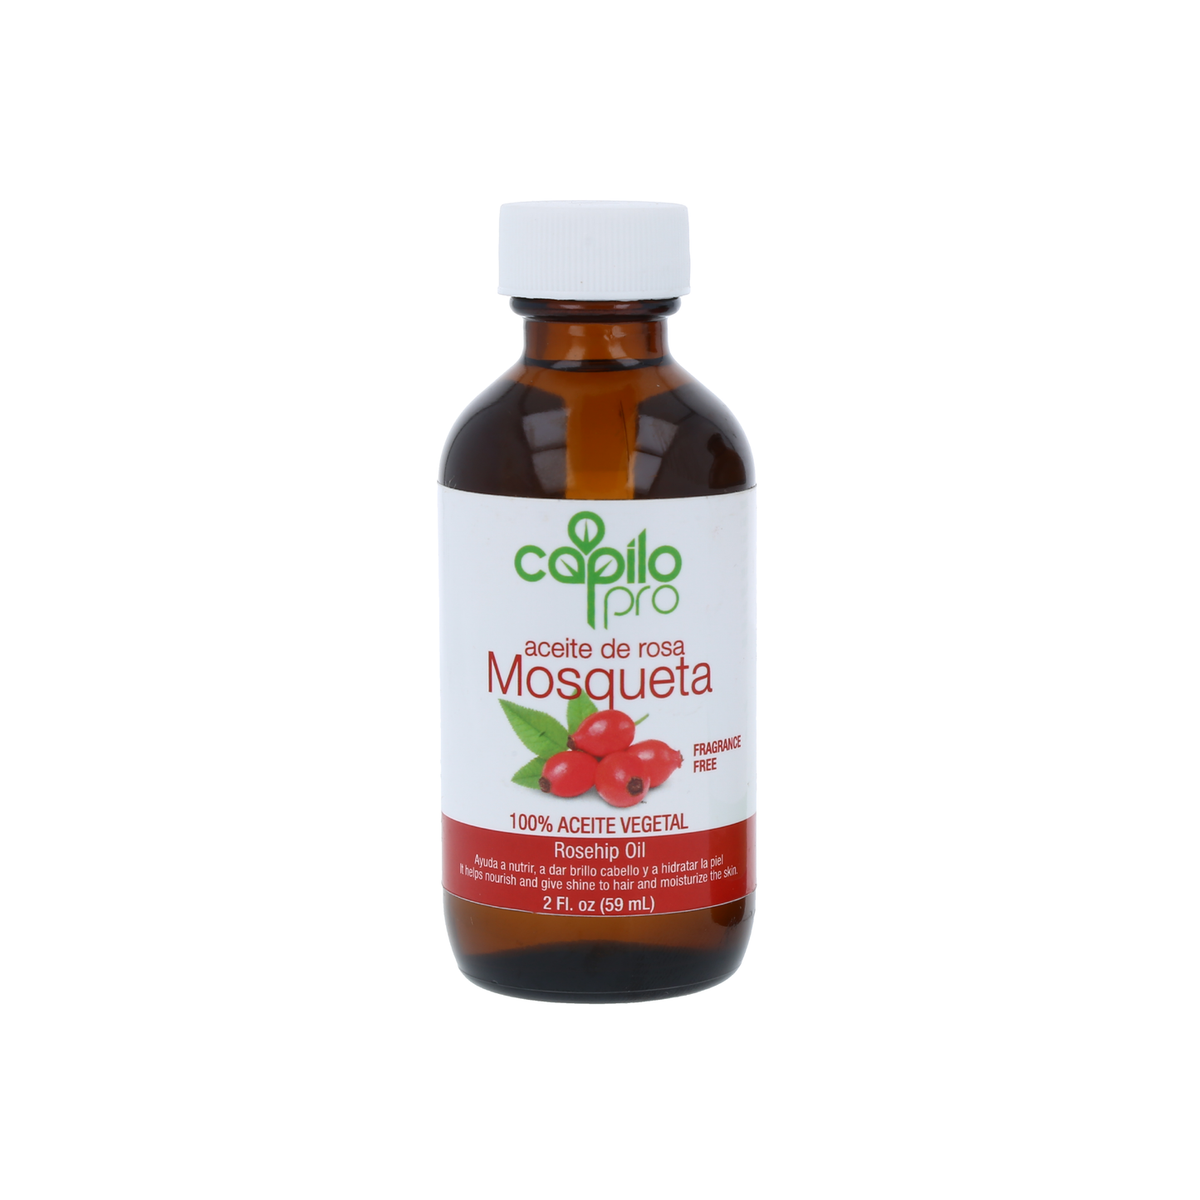 Capilo Pro Rosehip Oil, Hair and Skin Care 2 oz